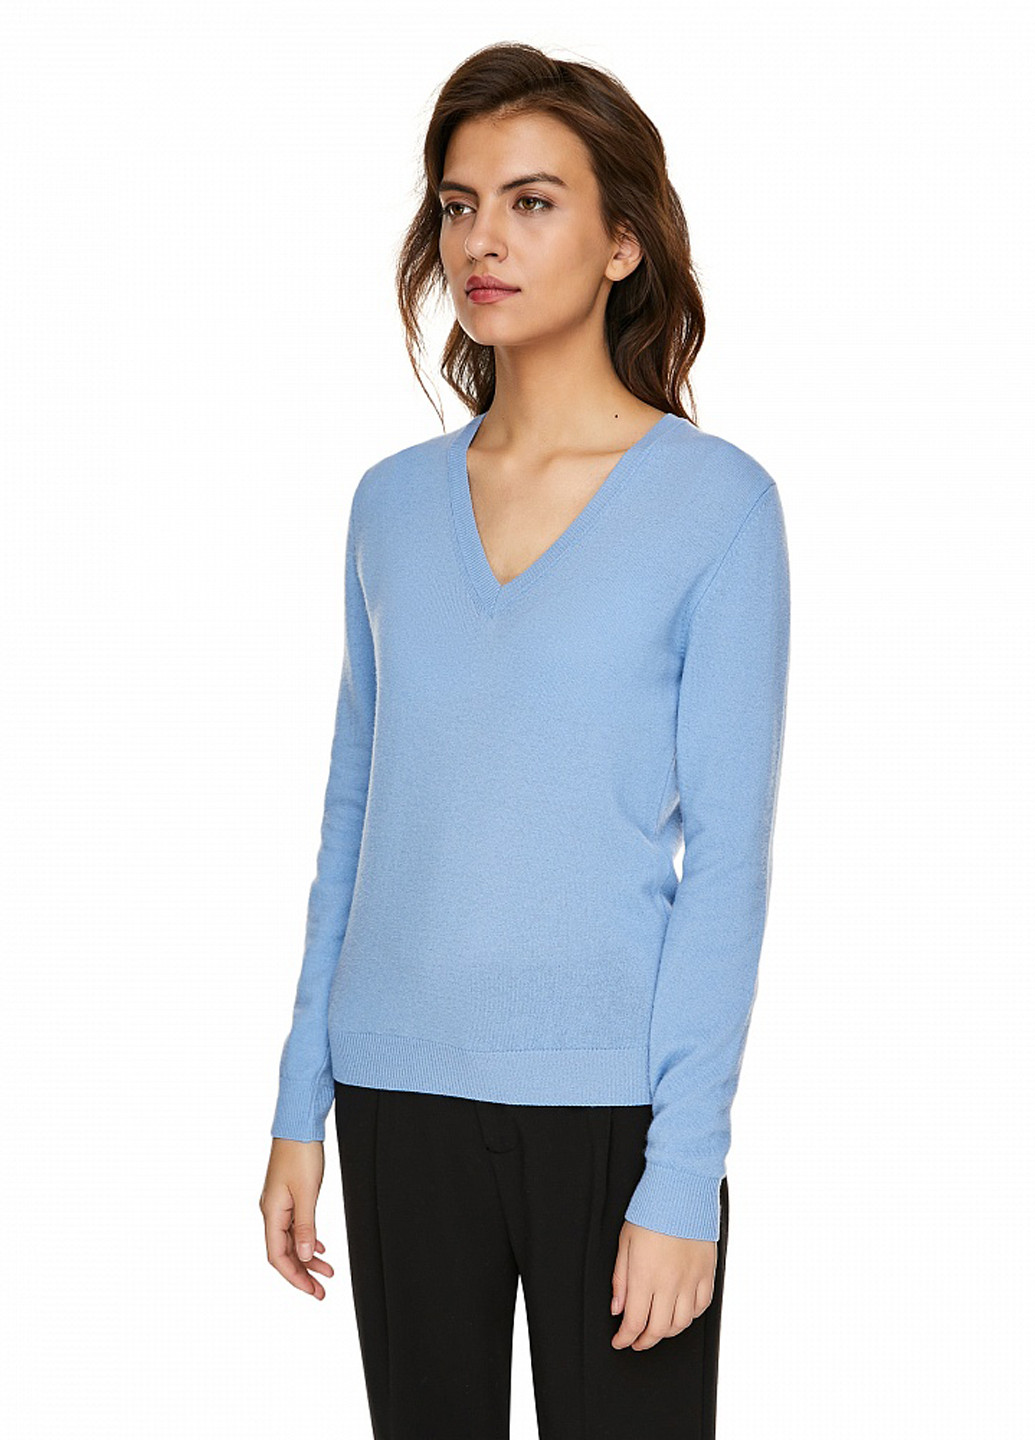 Голубой демисезонный пуловер пуловер United Colors of Benetton